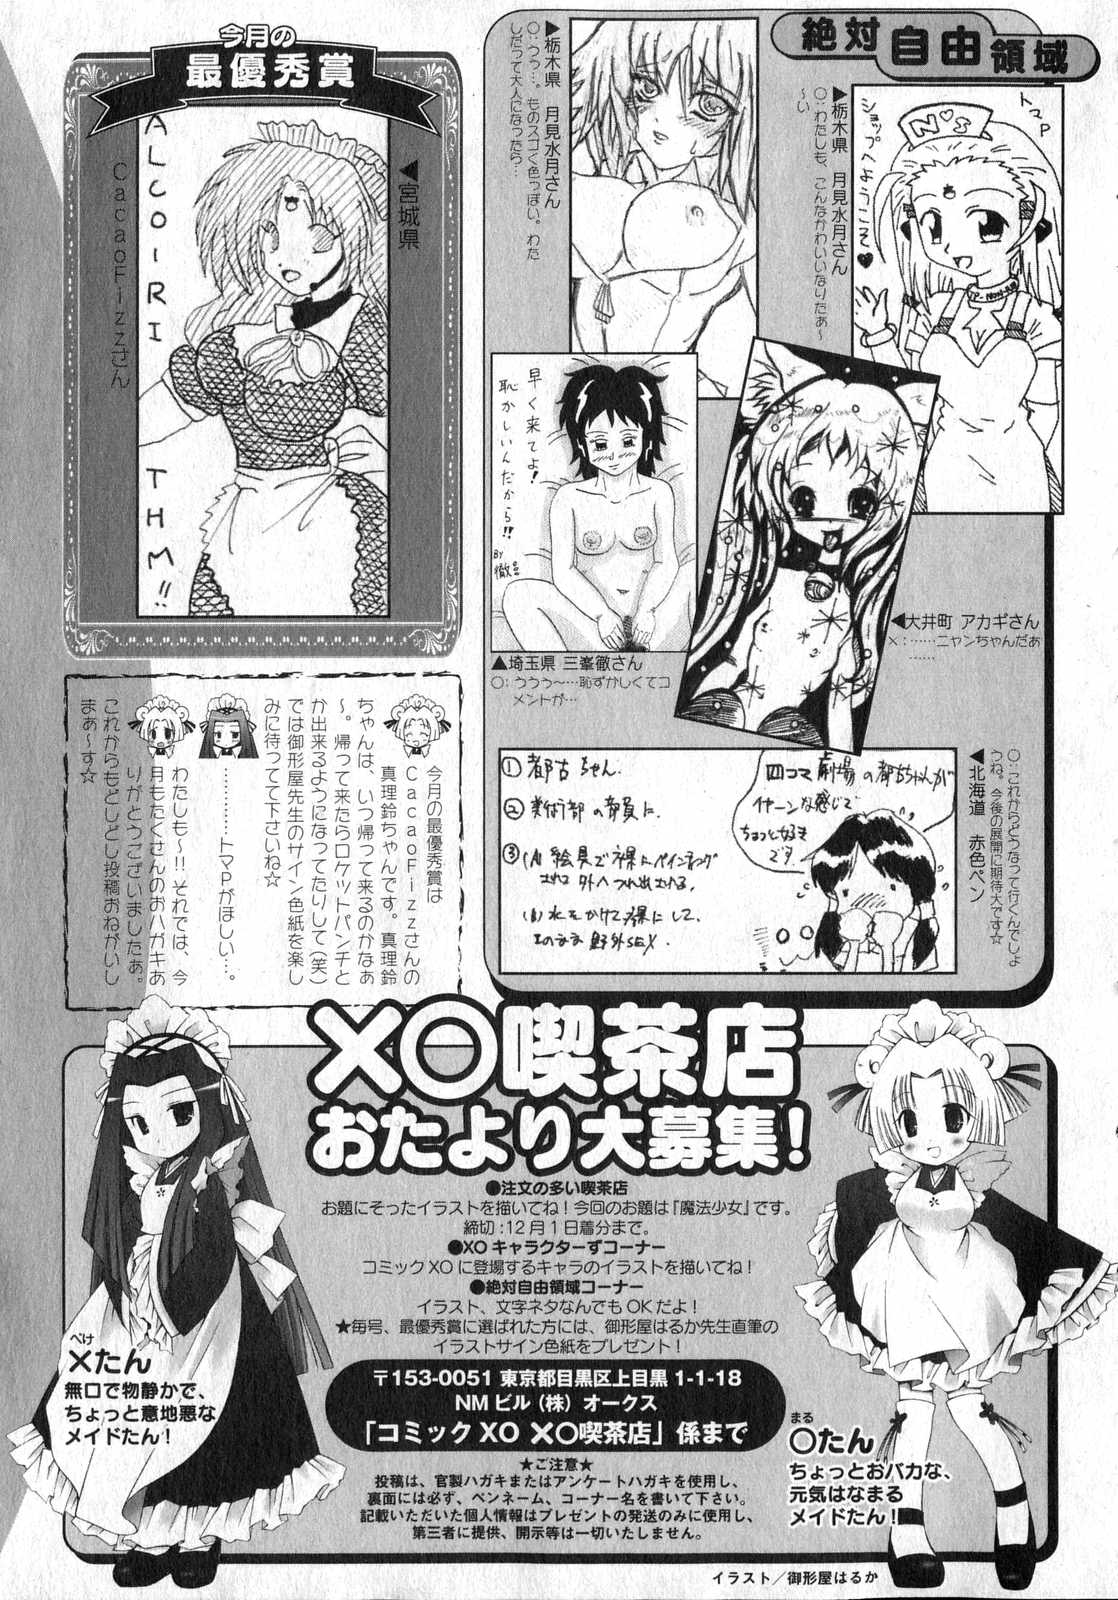 COMIC XO 2006年12月号 Vol.7